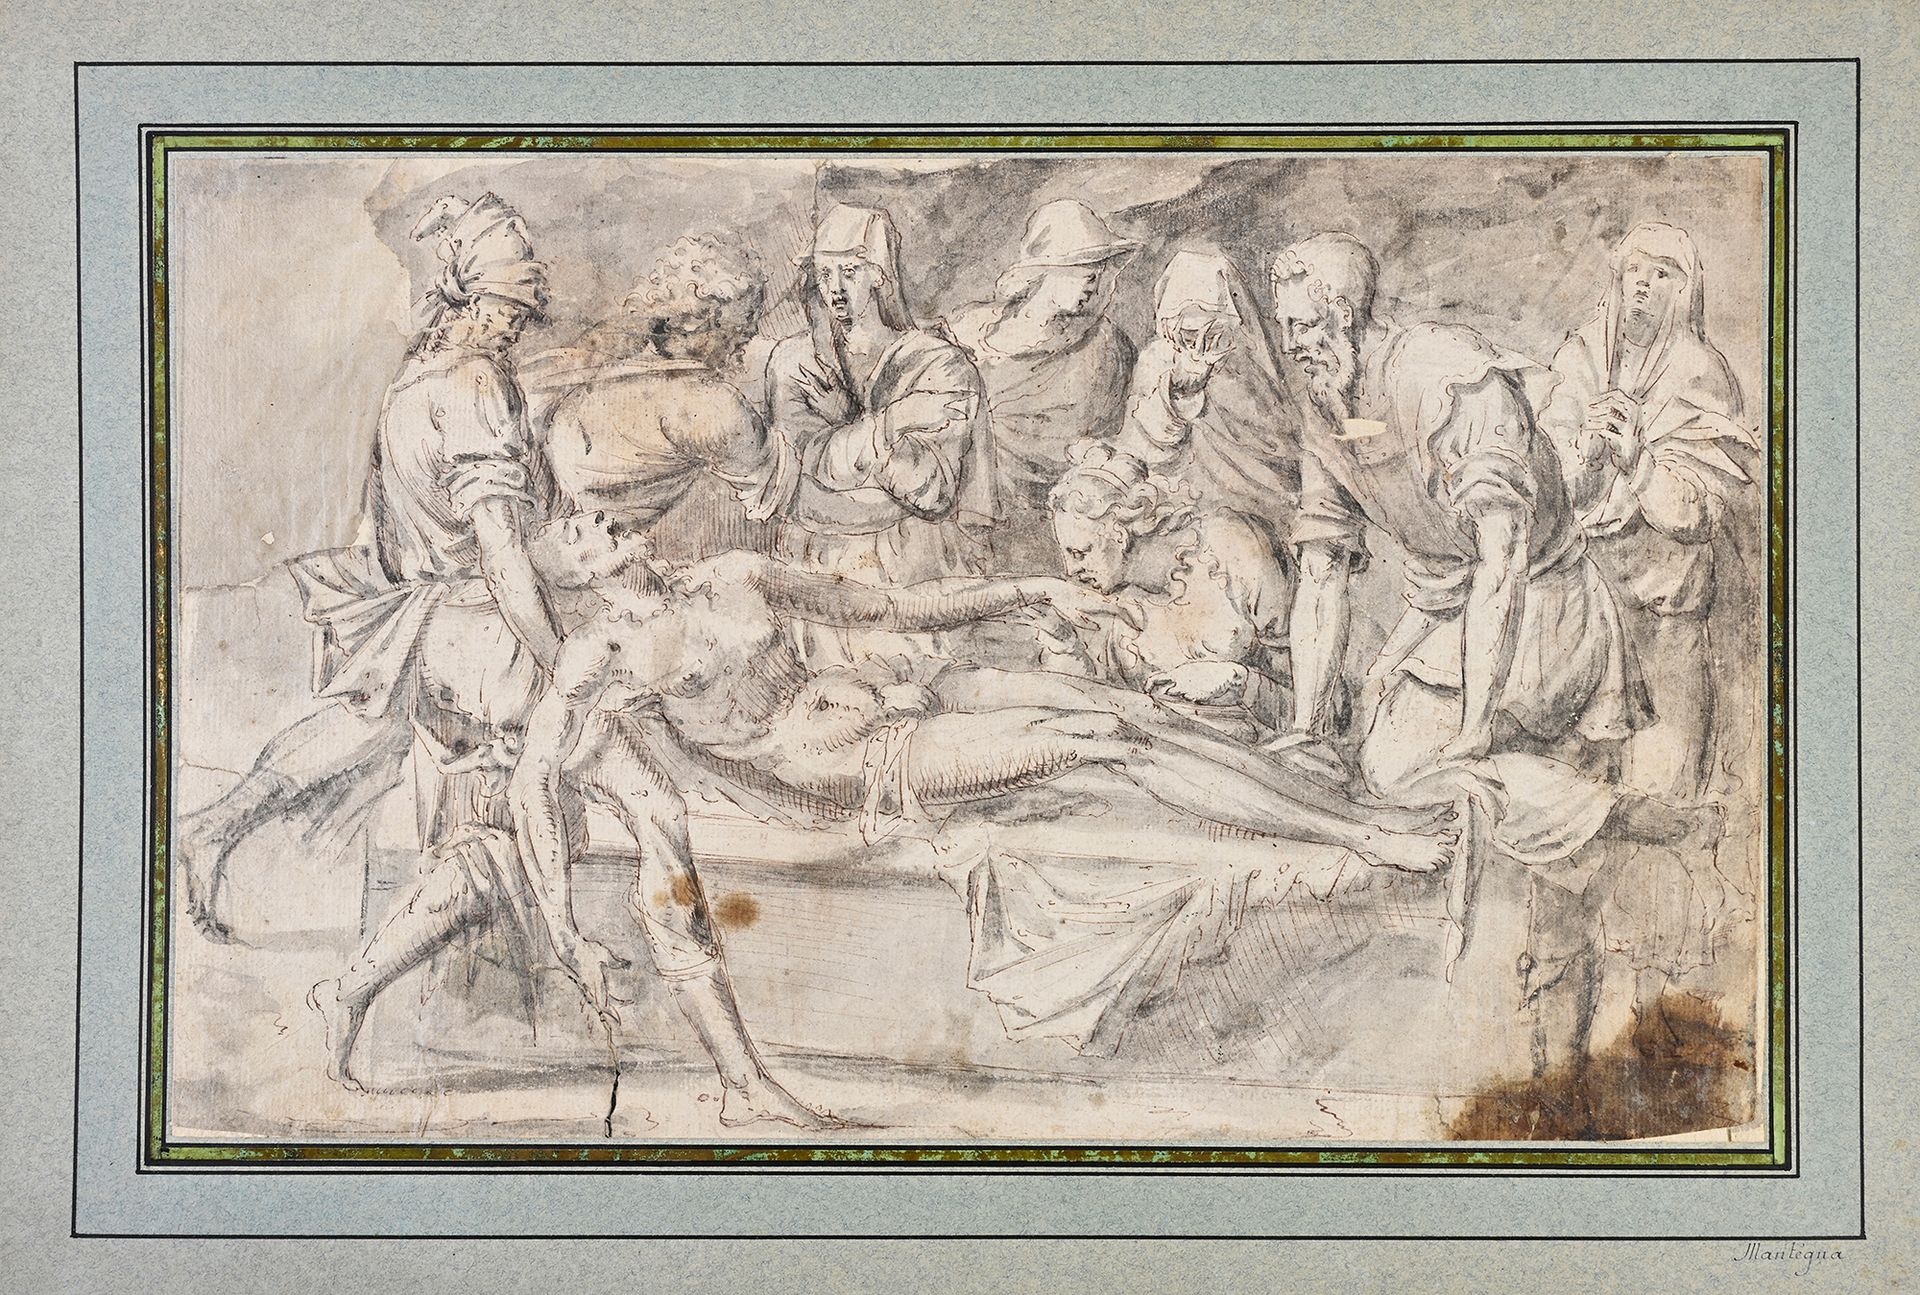 Entourage de Jean COUSIN (v.1503 - v.1560) 墓穴
钢笔和棕色墨水，灰色水洗 18.3 x 29.5 cm
裱框右下角有&hellip;